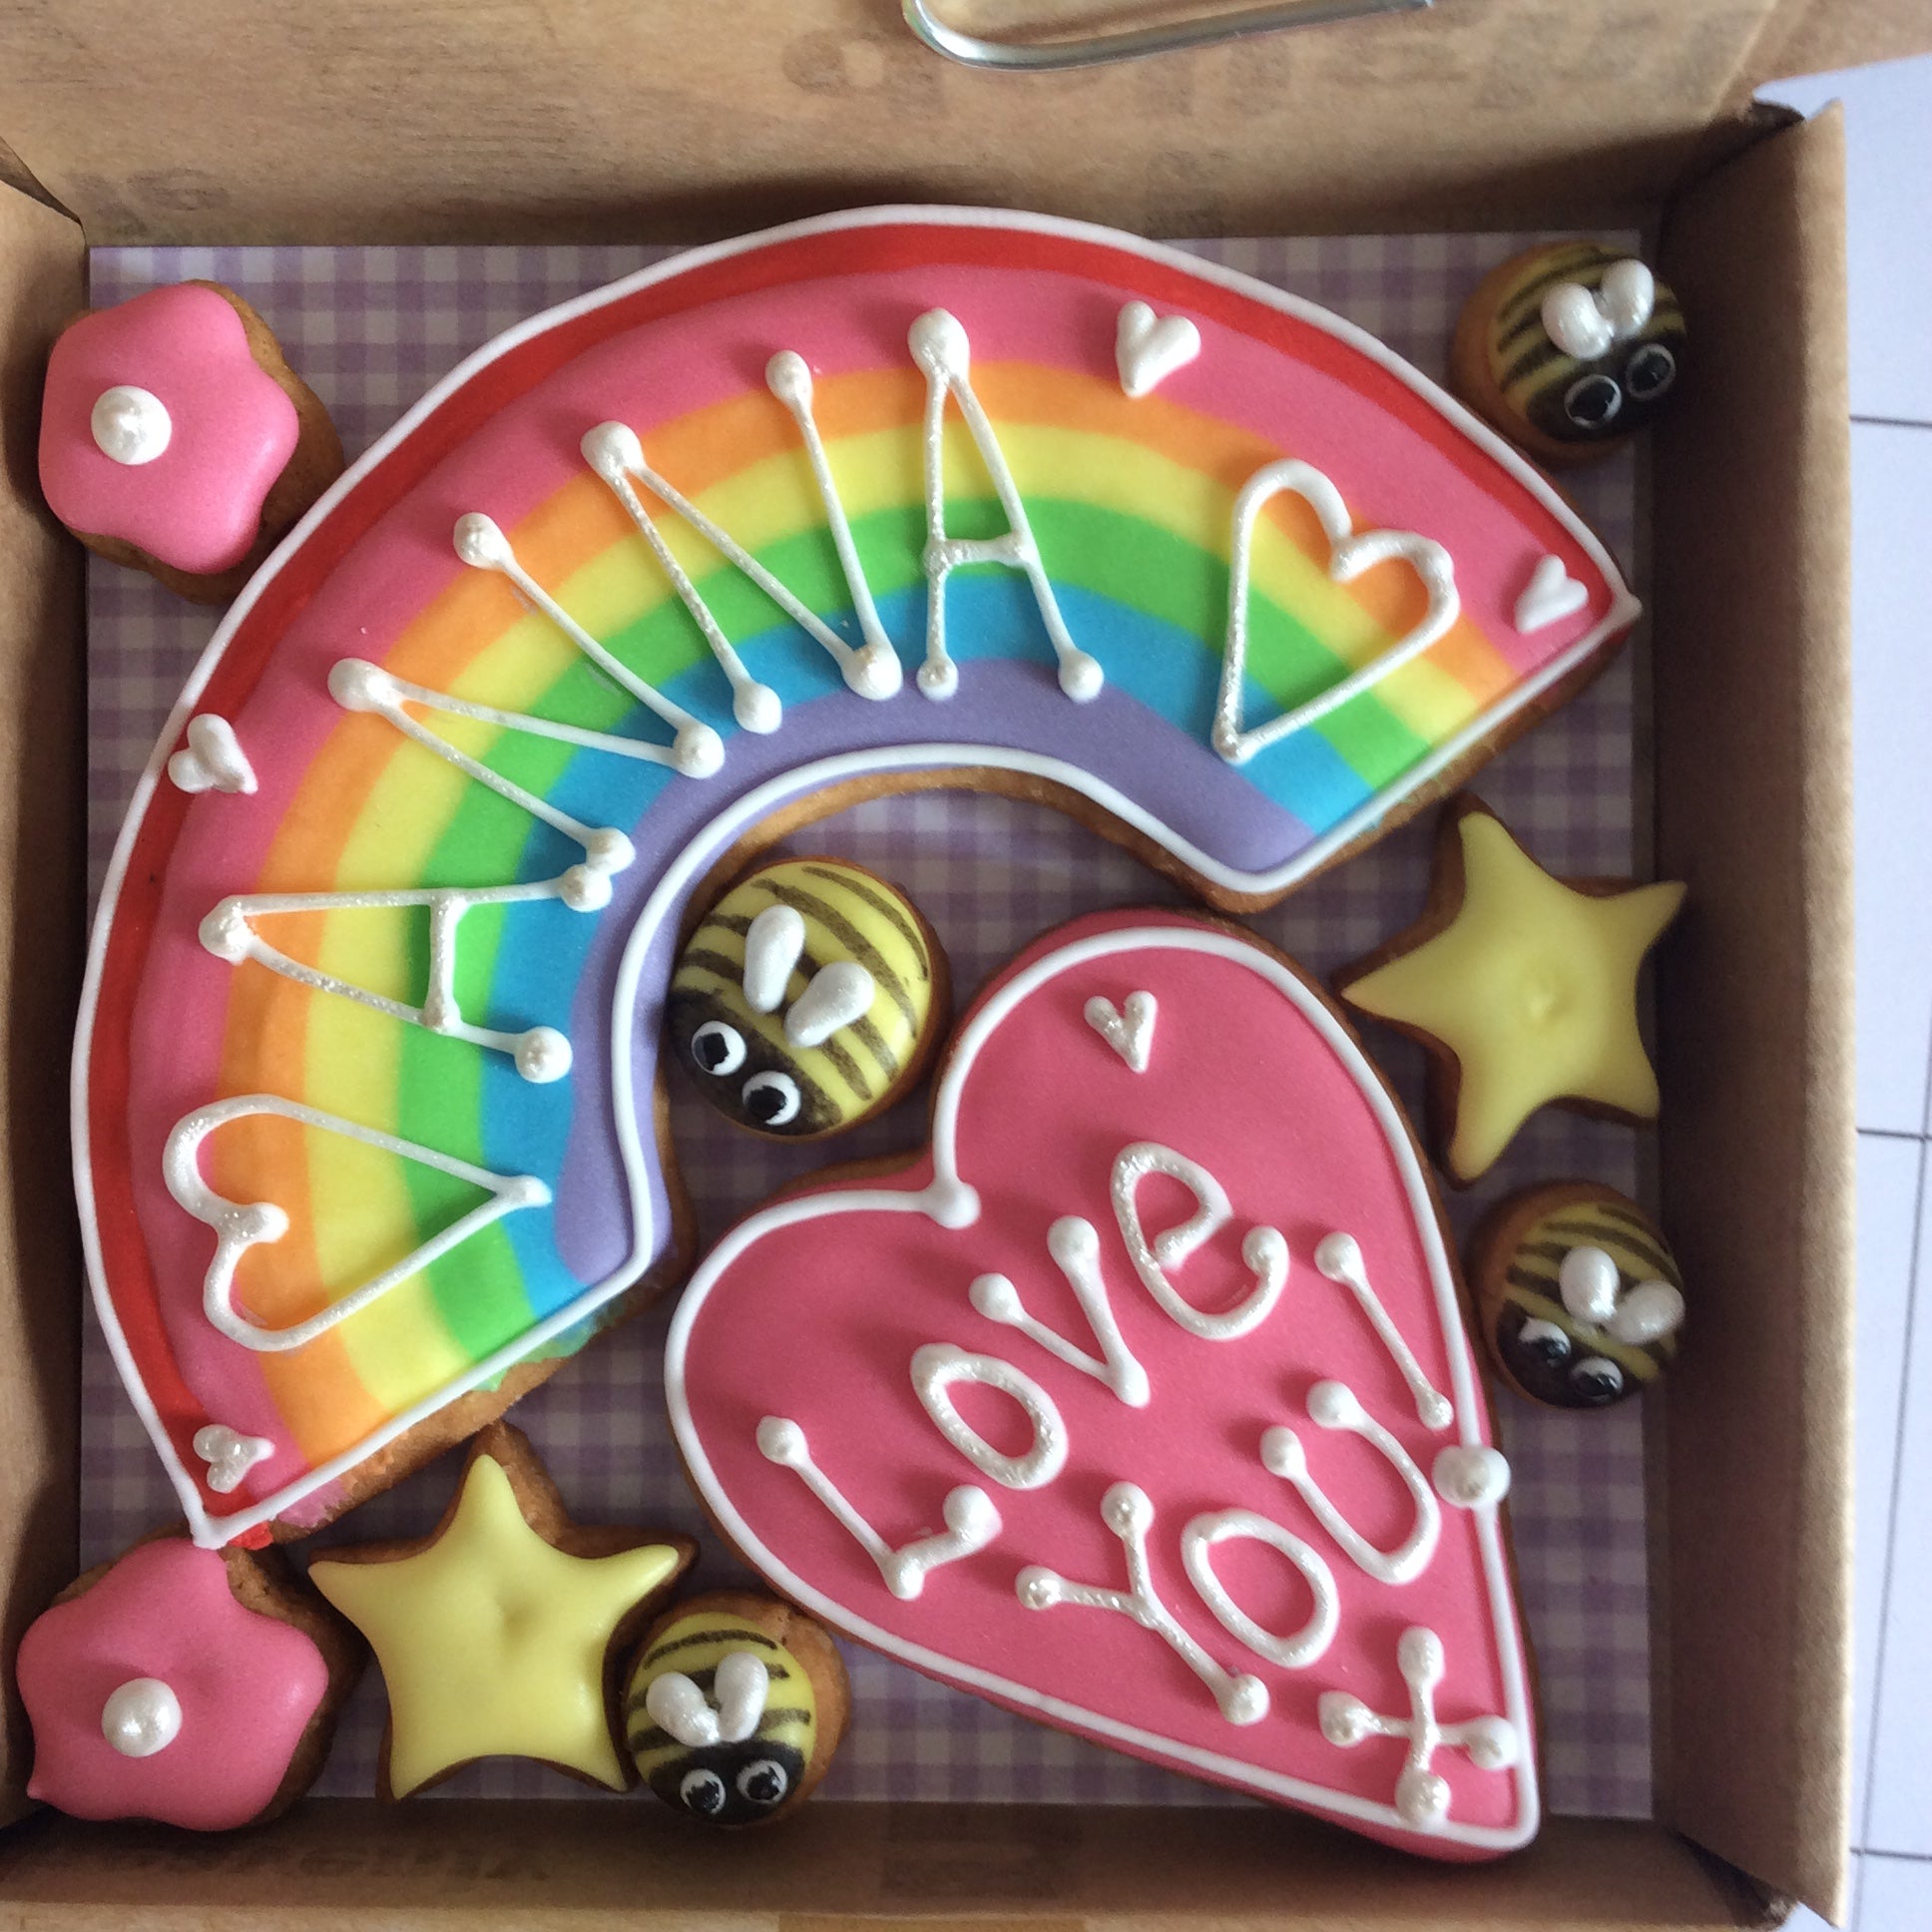 Little Box of Joy - Rainbow and Heart Cookie Box